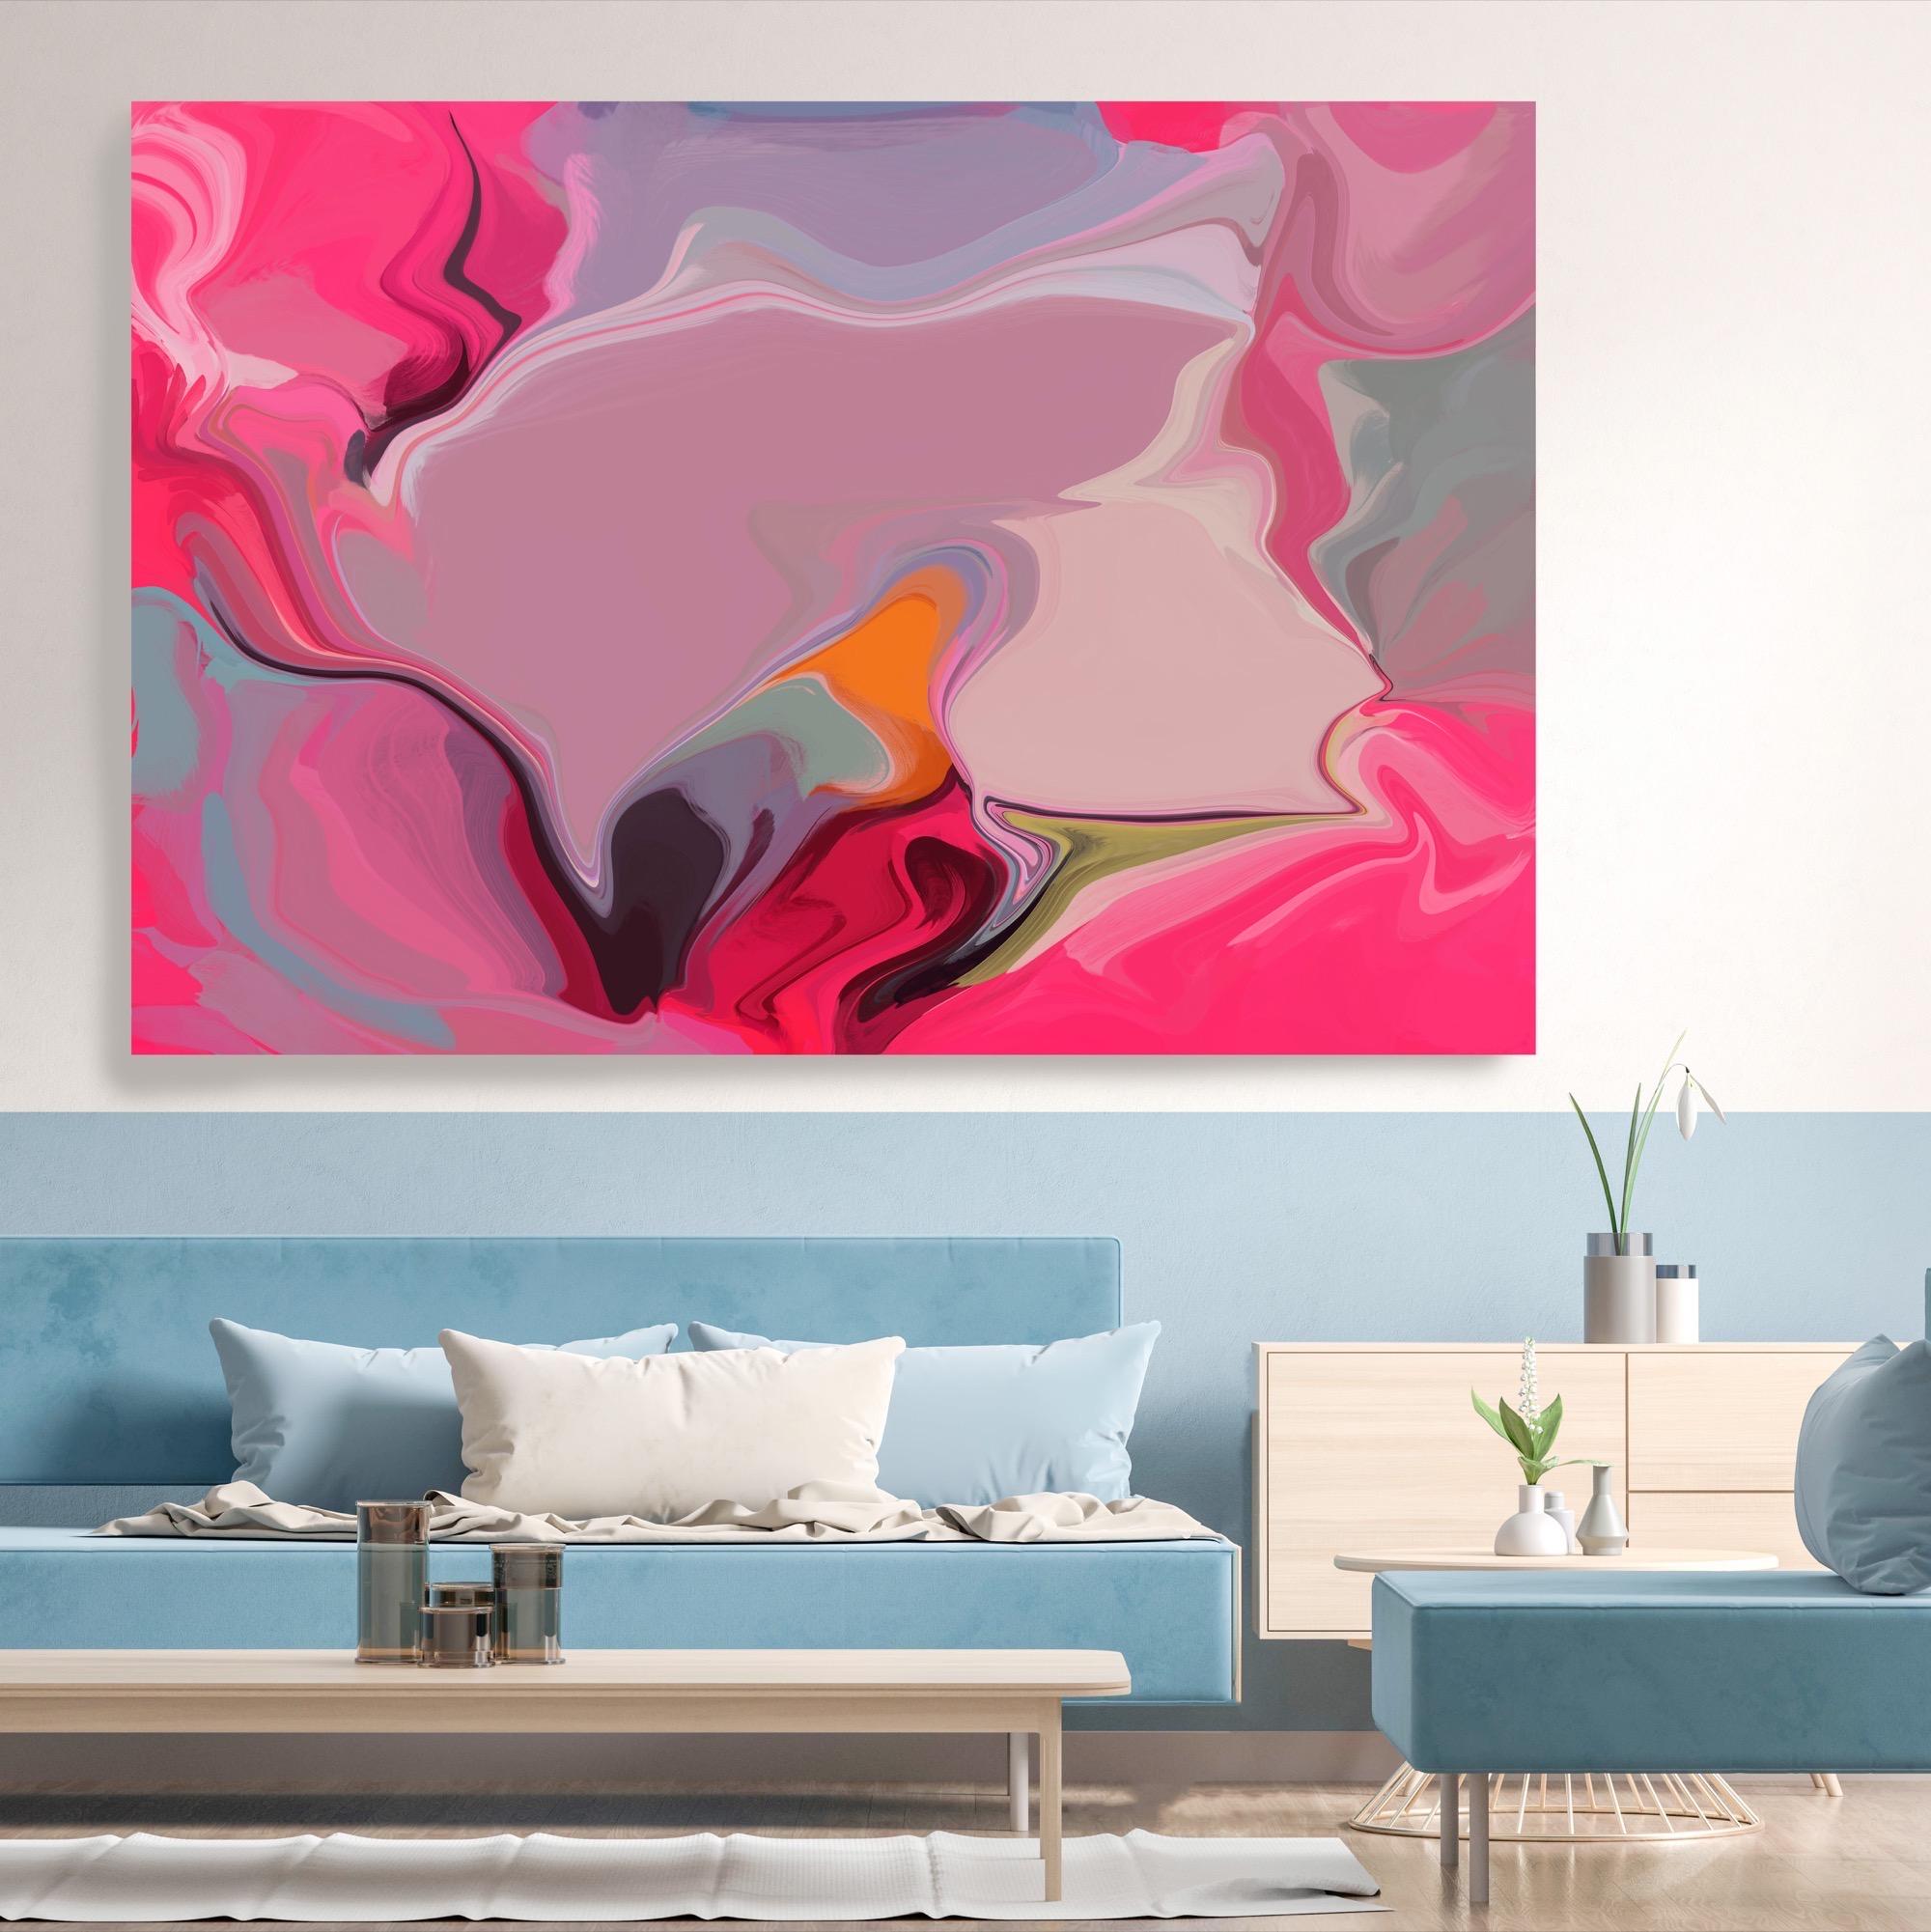 Peinture rose sur toile technique mixte, 45 x 60 po., The Creative Struggle - Painting de Irena Orlov